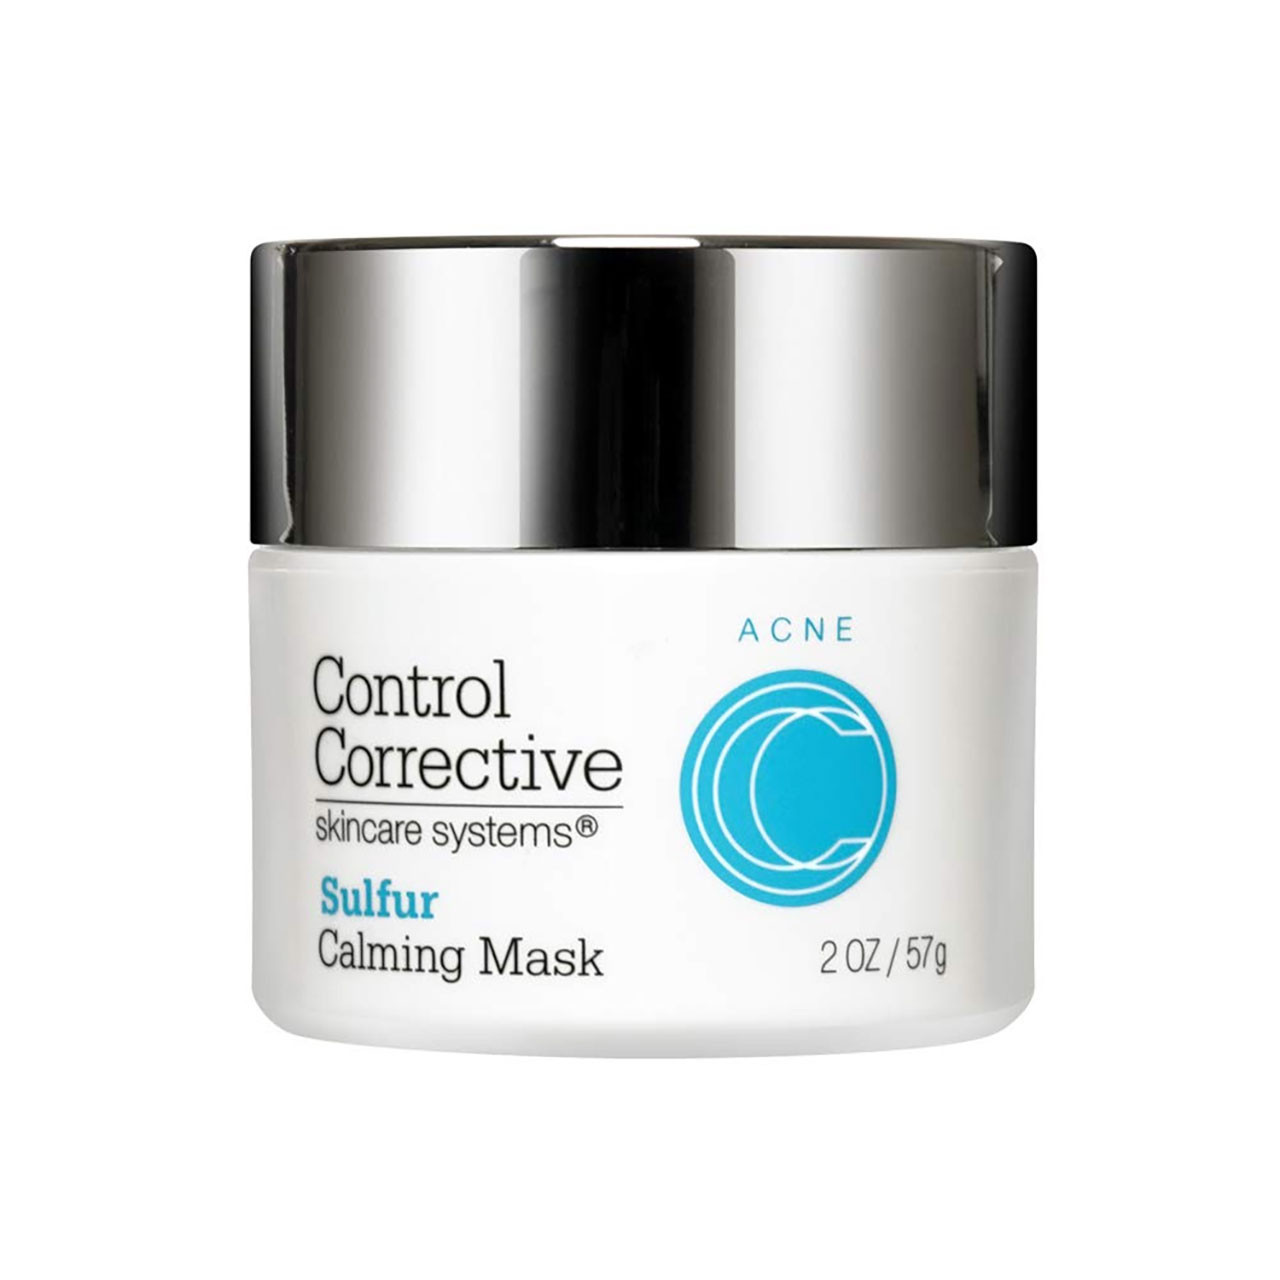 Control Corrective Sulfur Calming Mask - 2 oz